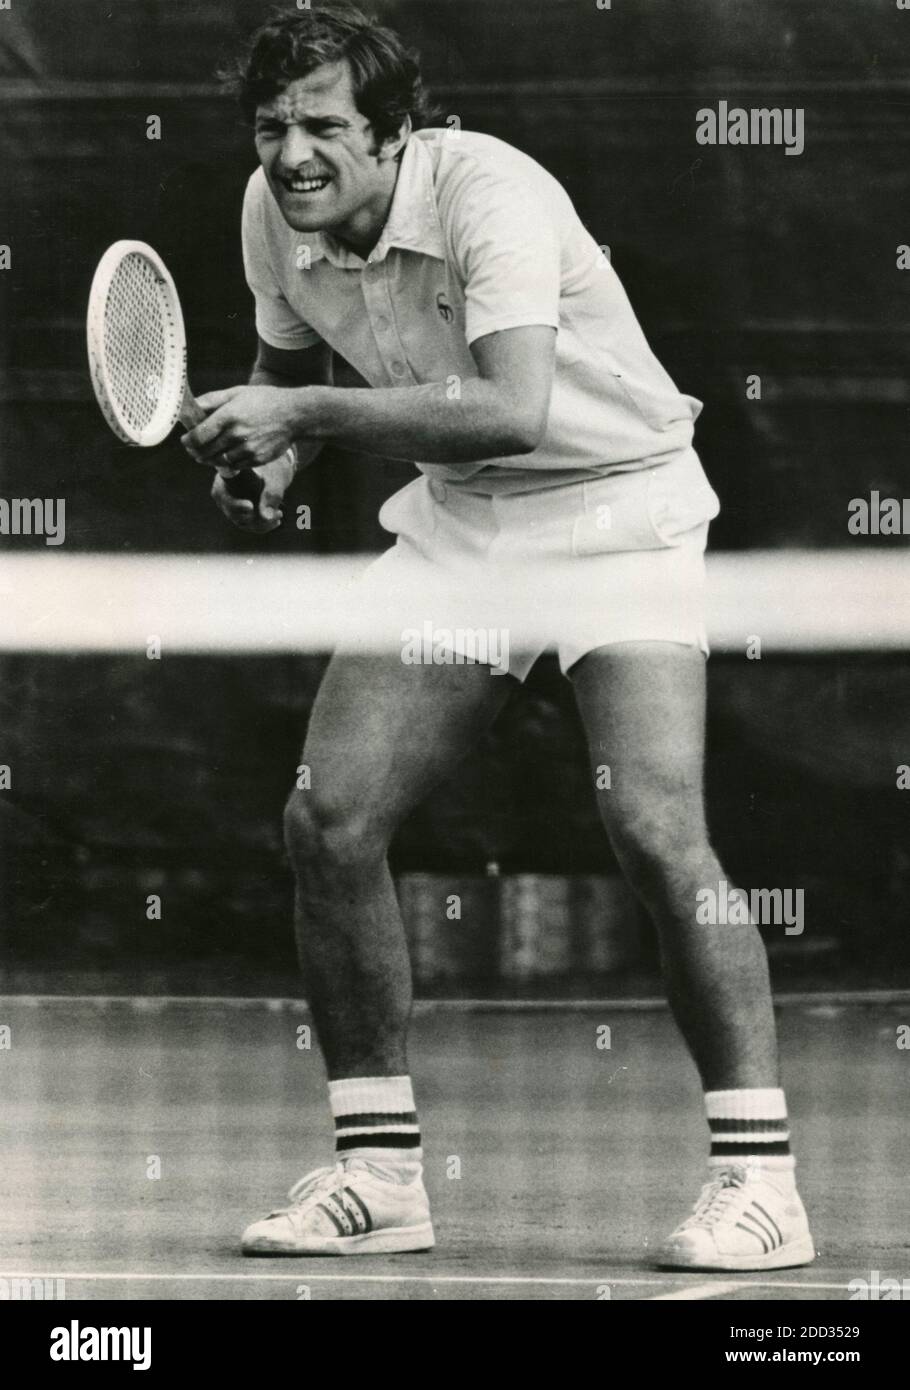 Czech tennis player Jan Kodes, 1970s Stock Photo - Alamy